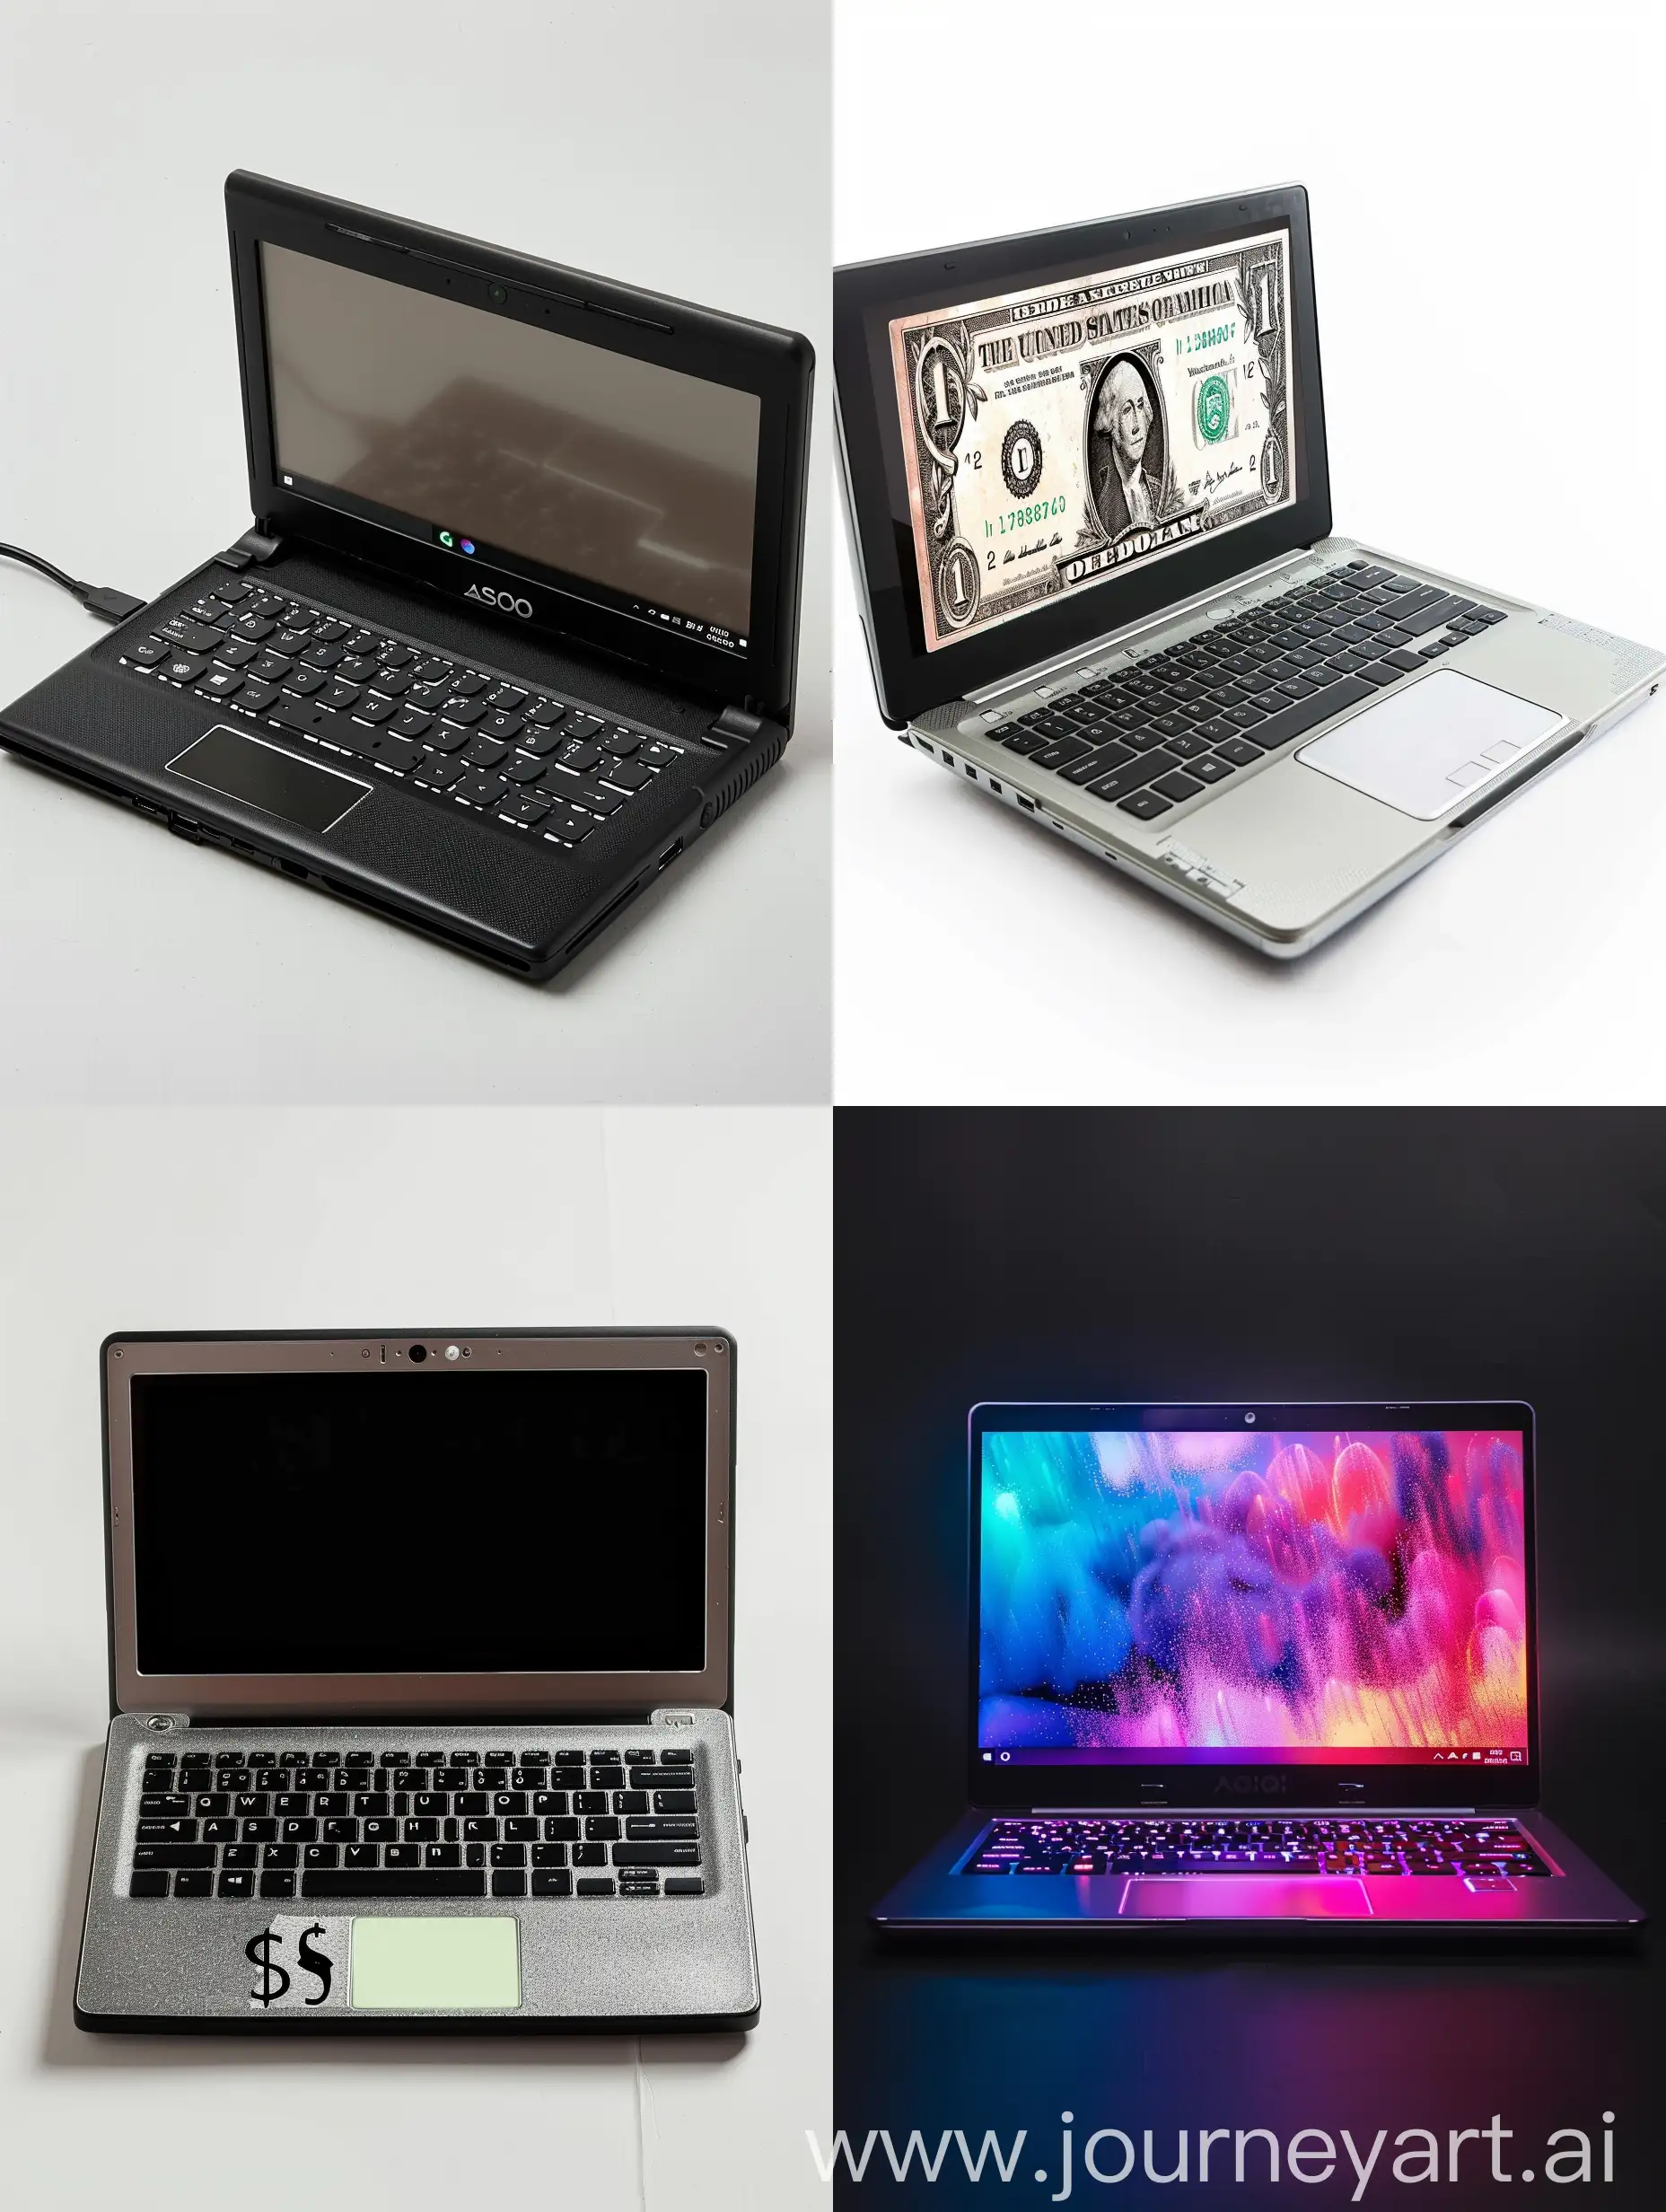 Budget-Laptop-on-Sale-for-1-Modern-Technology-Bargain